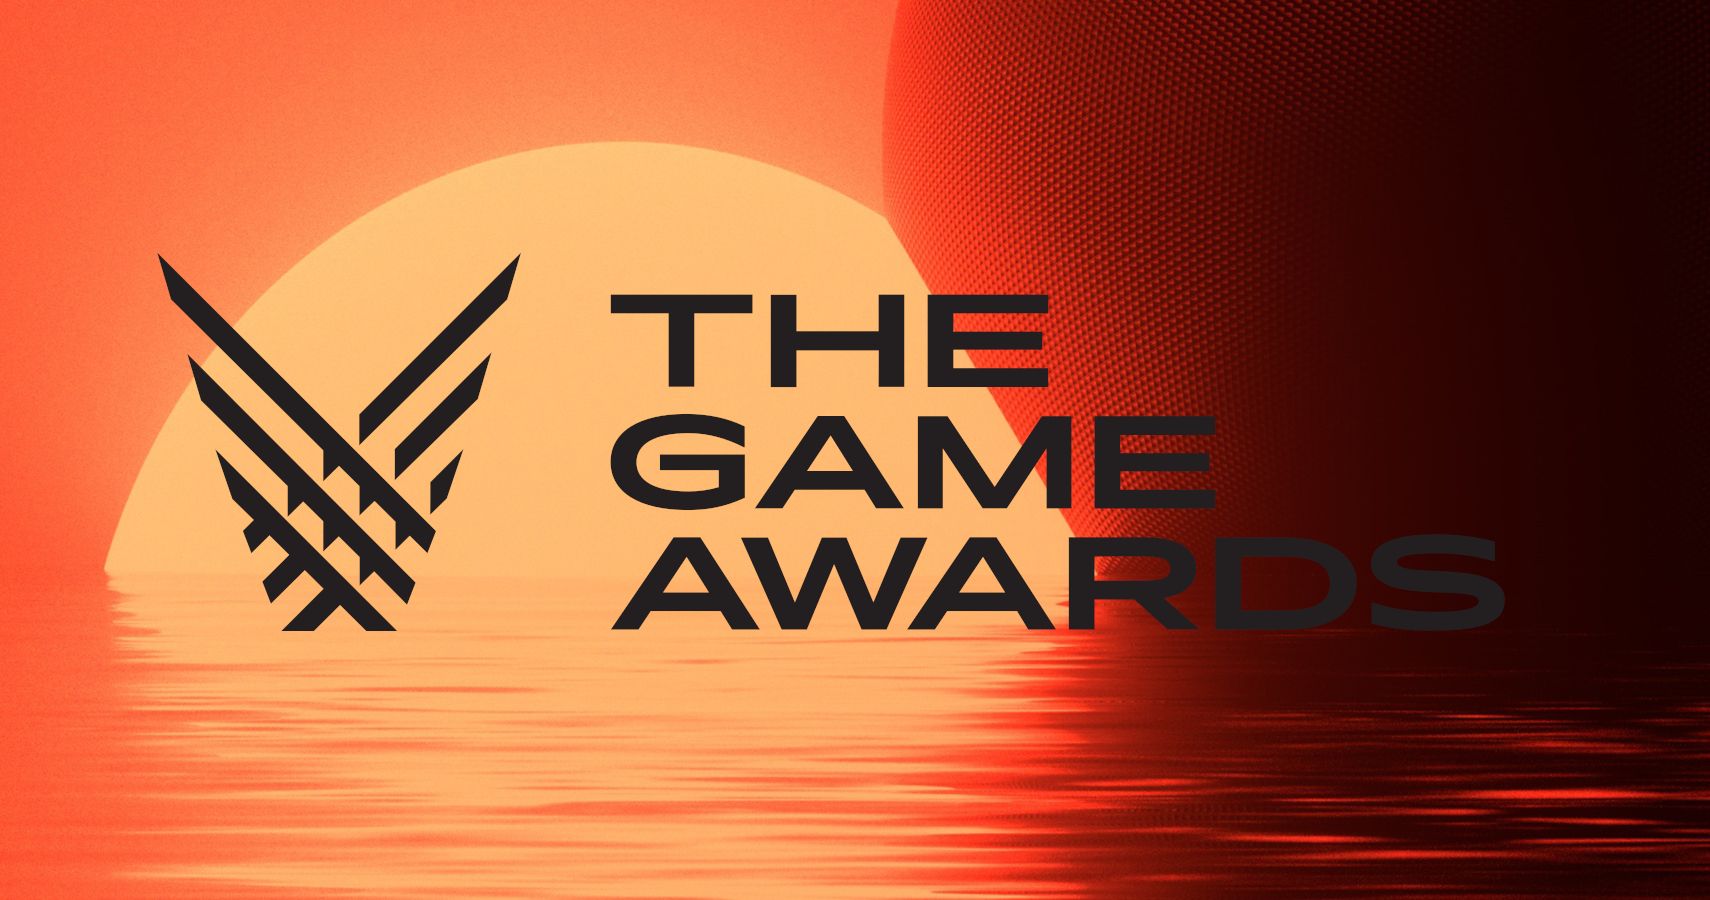 THE GAME AWARDS 2020 VIEWERSHIP INCREASES 84%, News